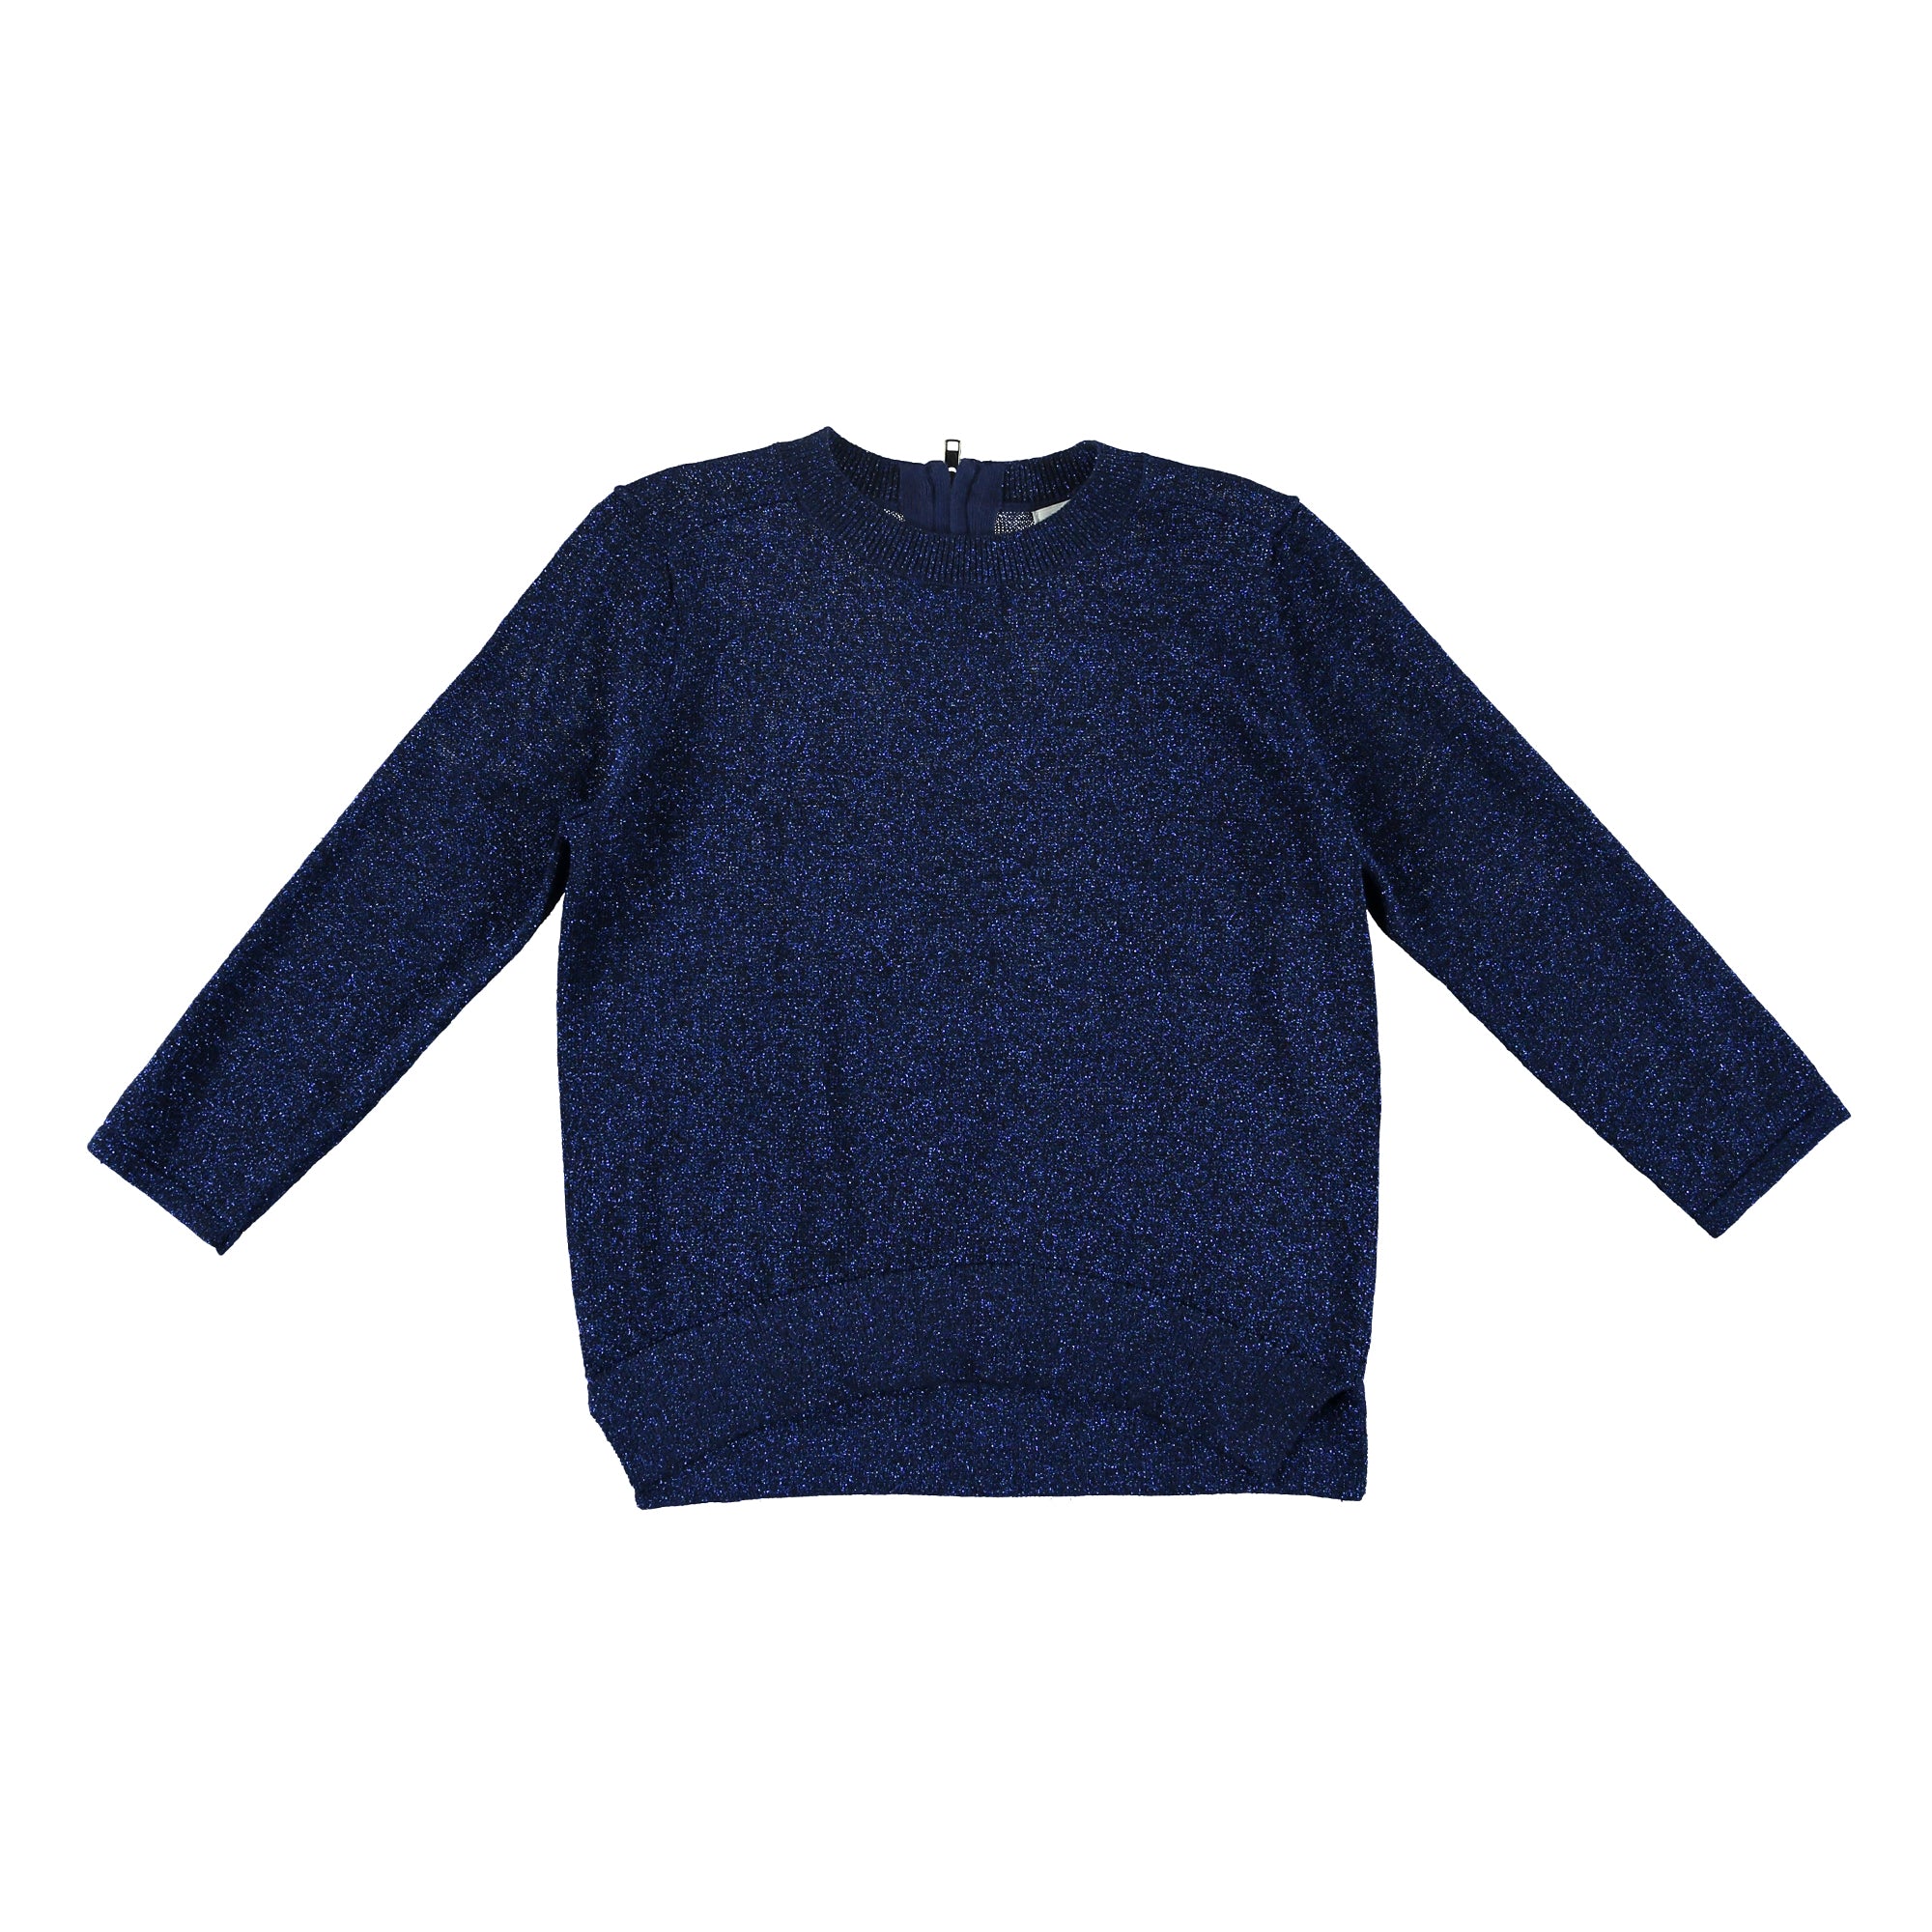 Boys Shiny Blue Cotton Sweater